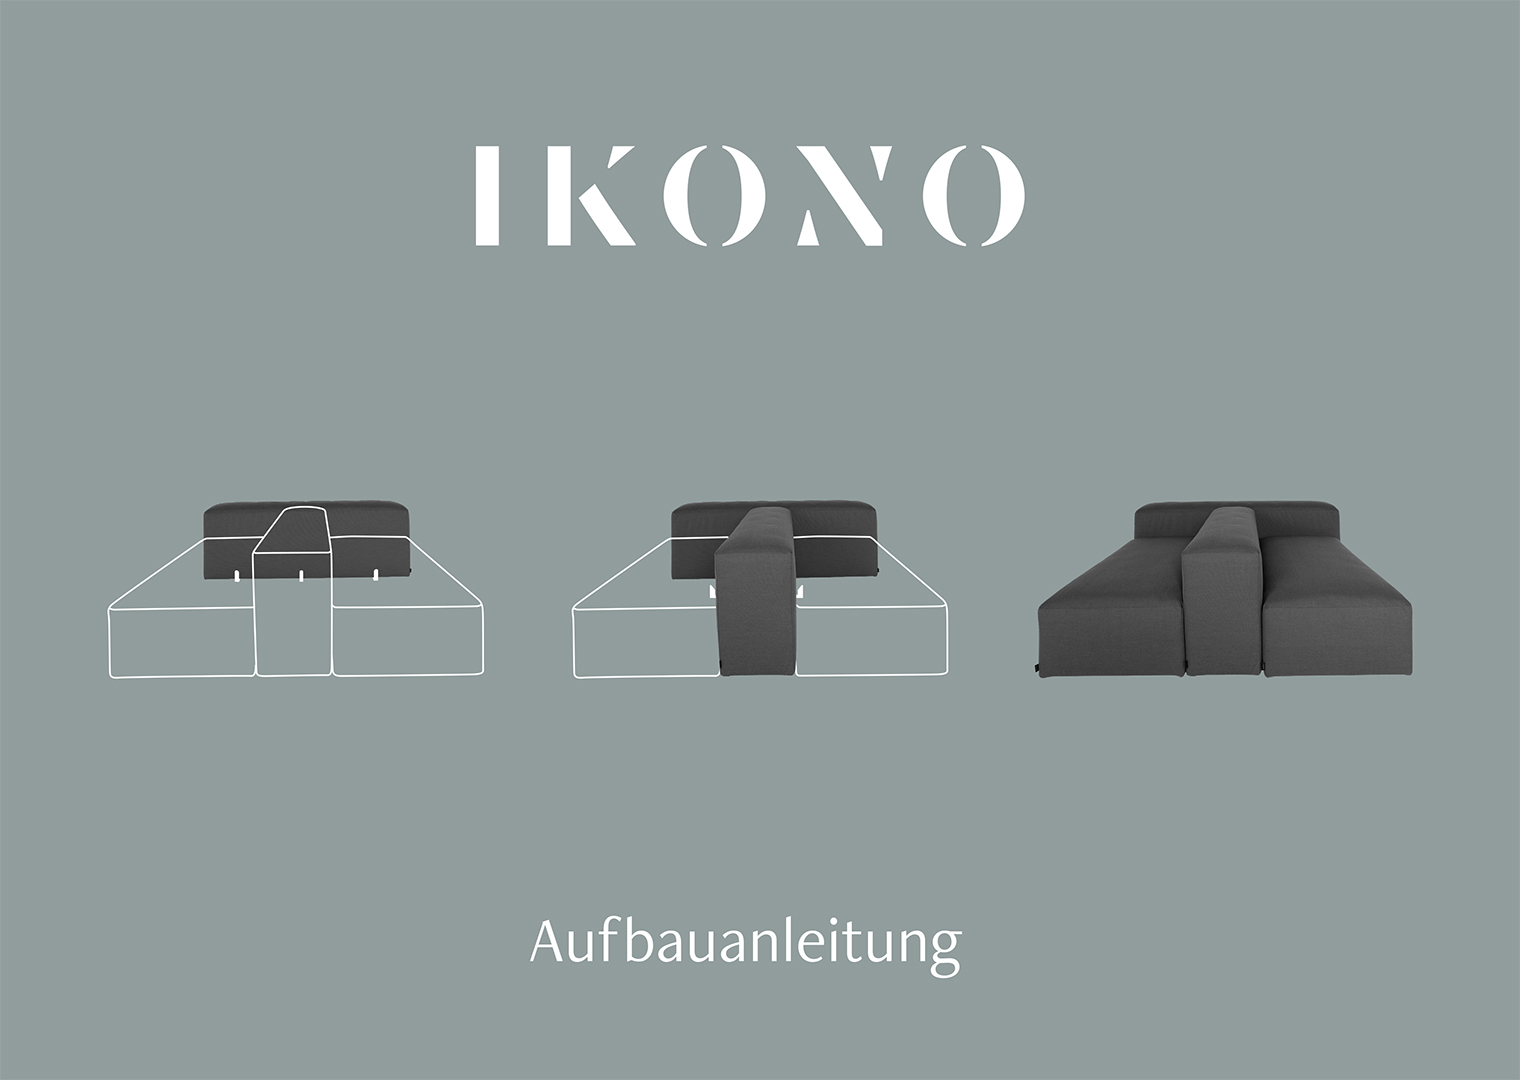 IKONO - Aufbauanleitung